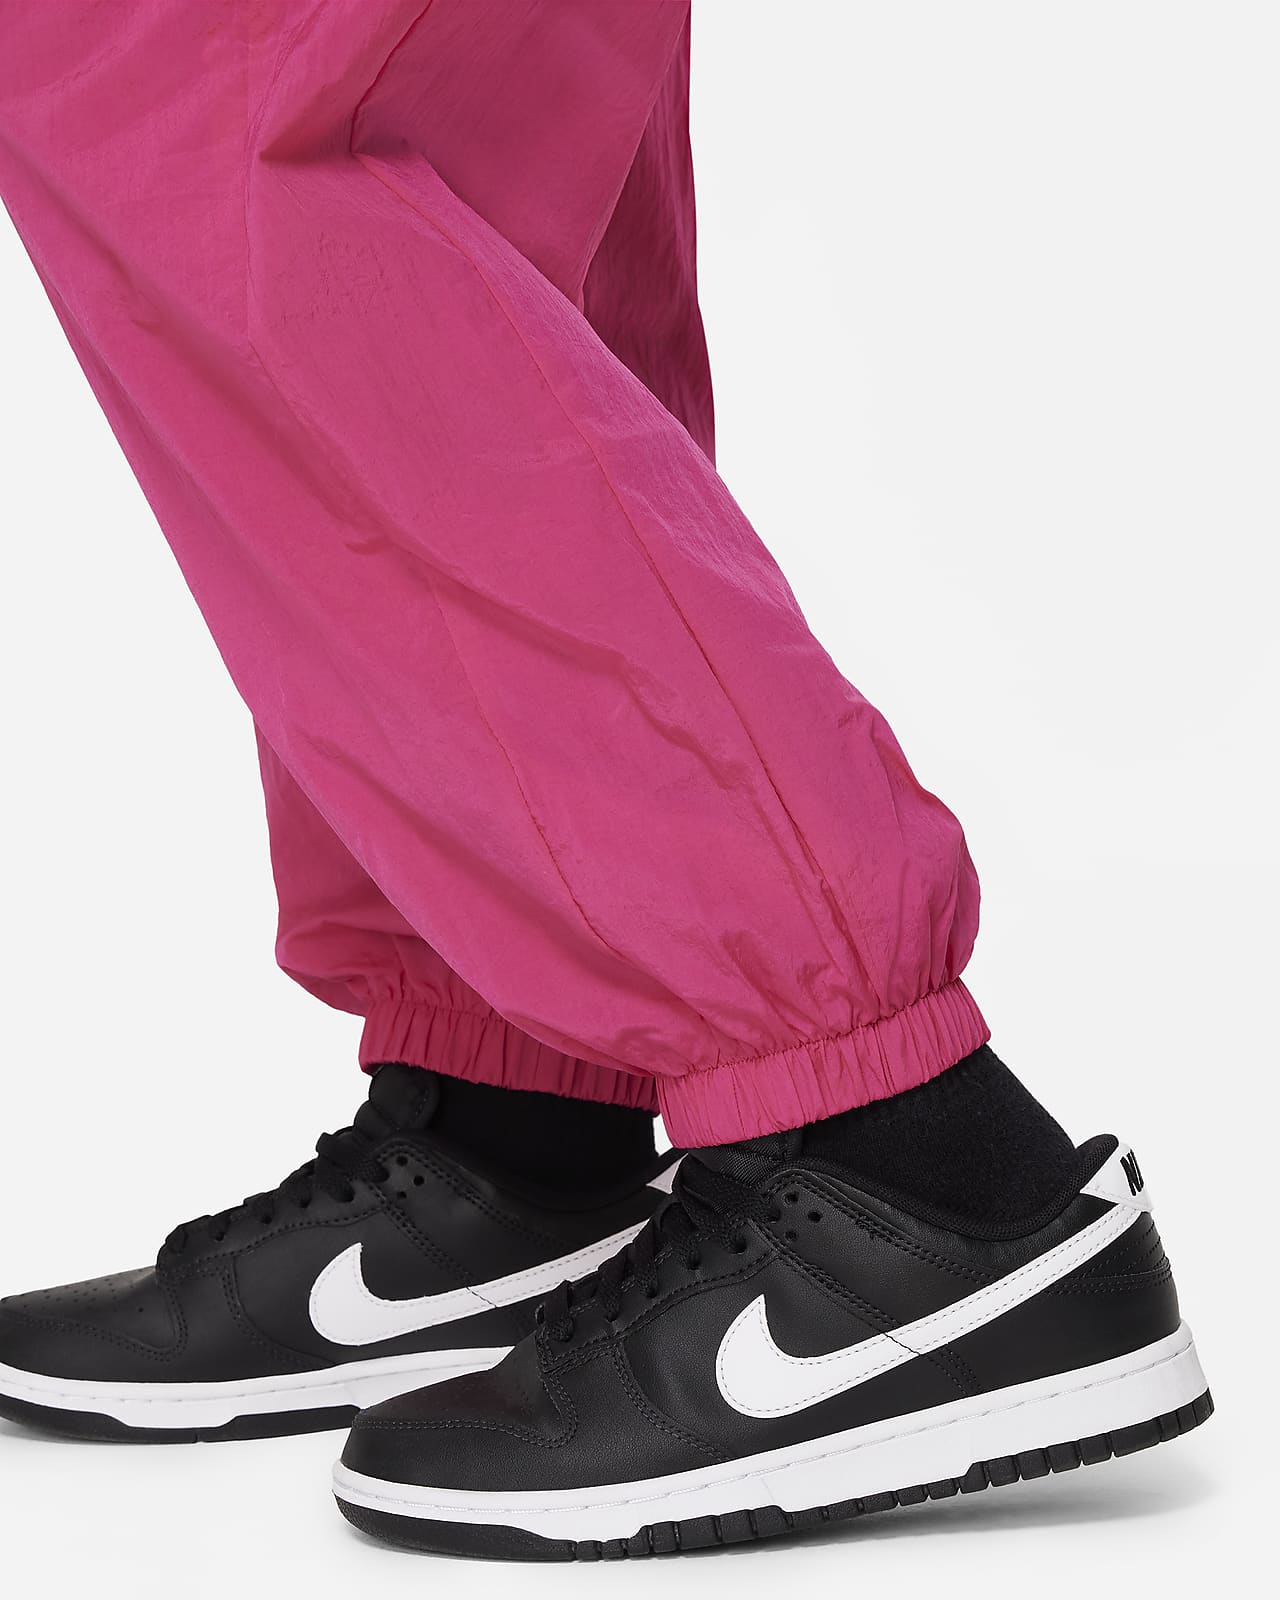 Nike Sportswear Big Swoosh Woven Pants (Asia Sizing)Black/White